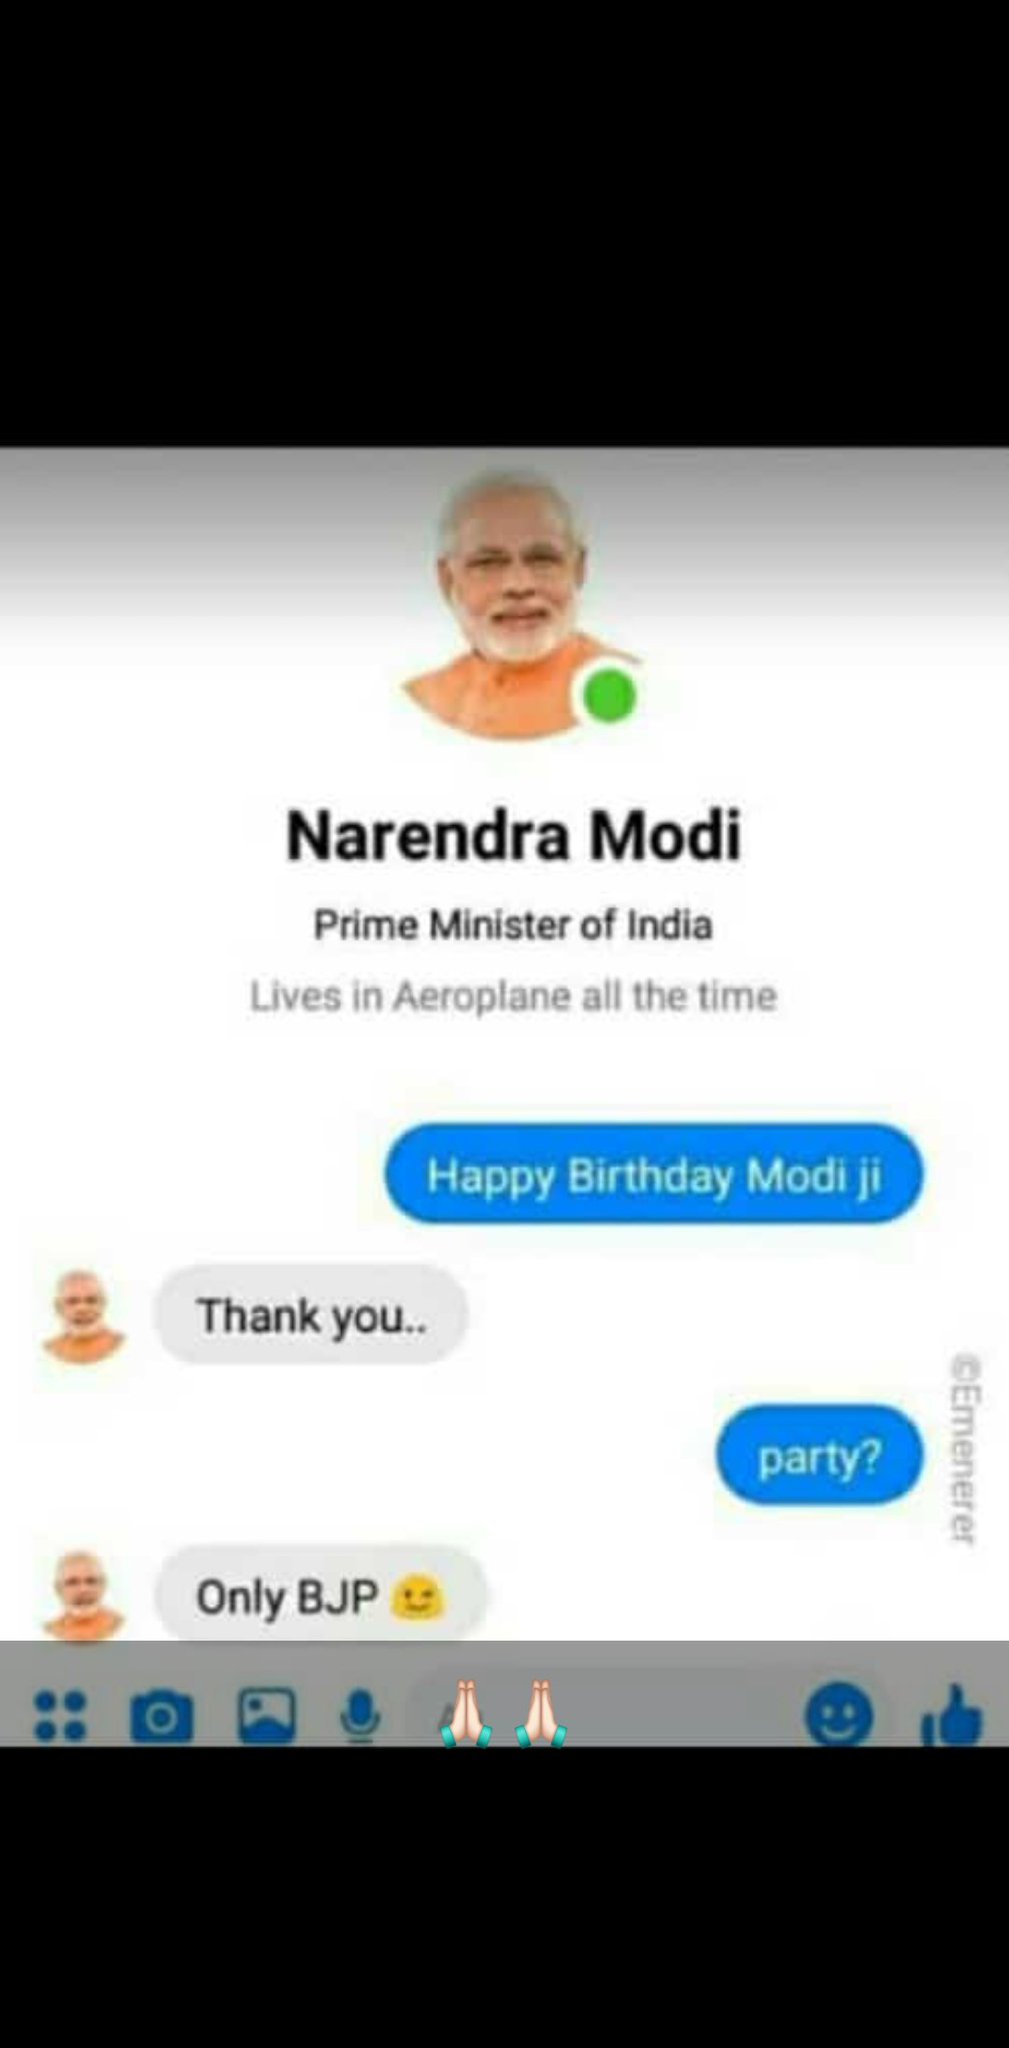 Happy birthday Narendra Modi ji 